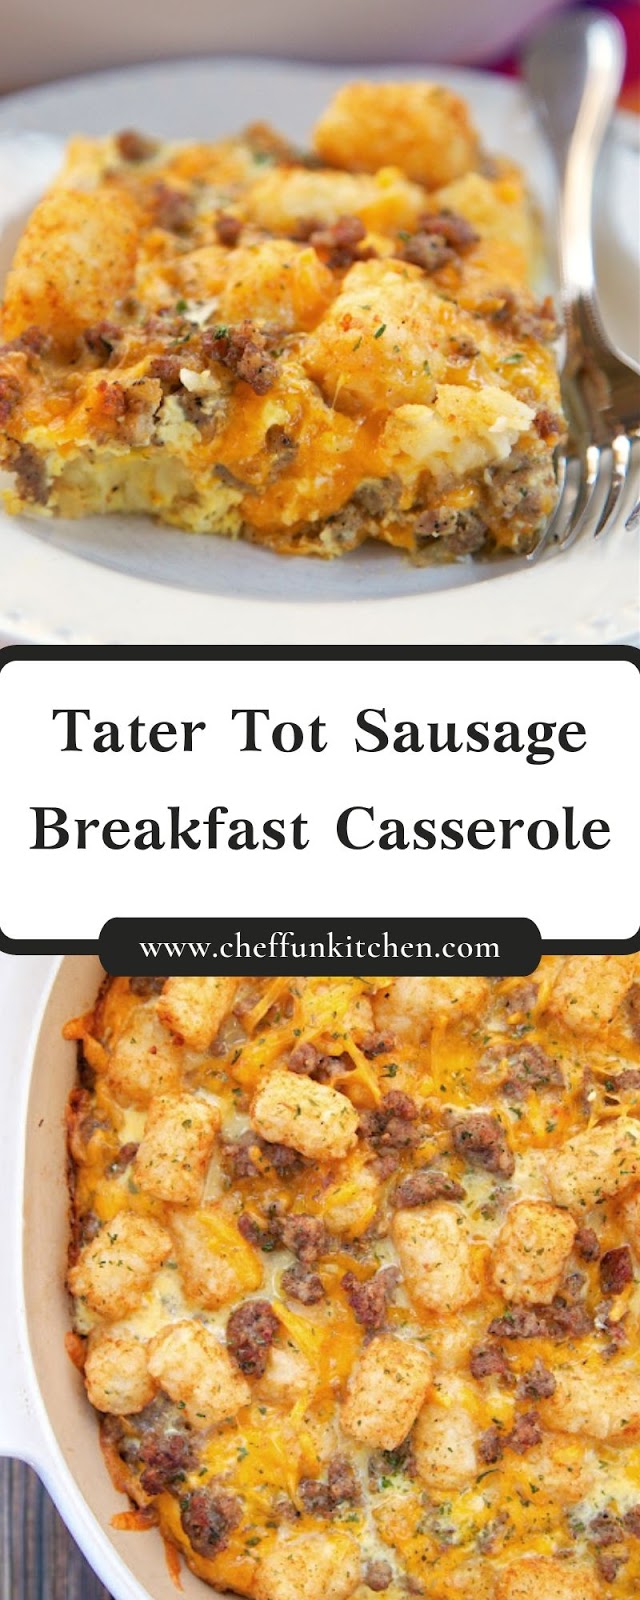 Tater Tot Sausage Breakfast Casserole